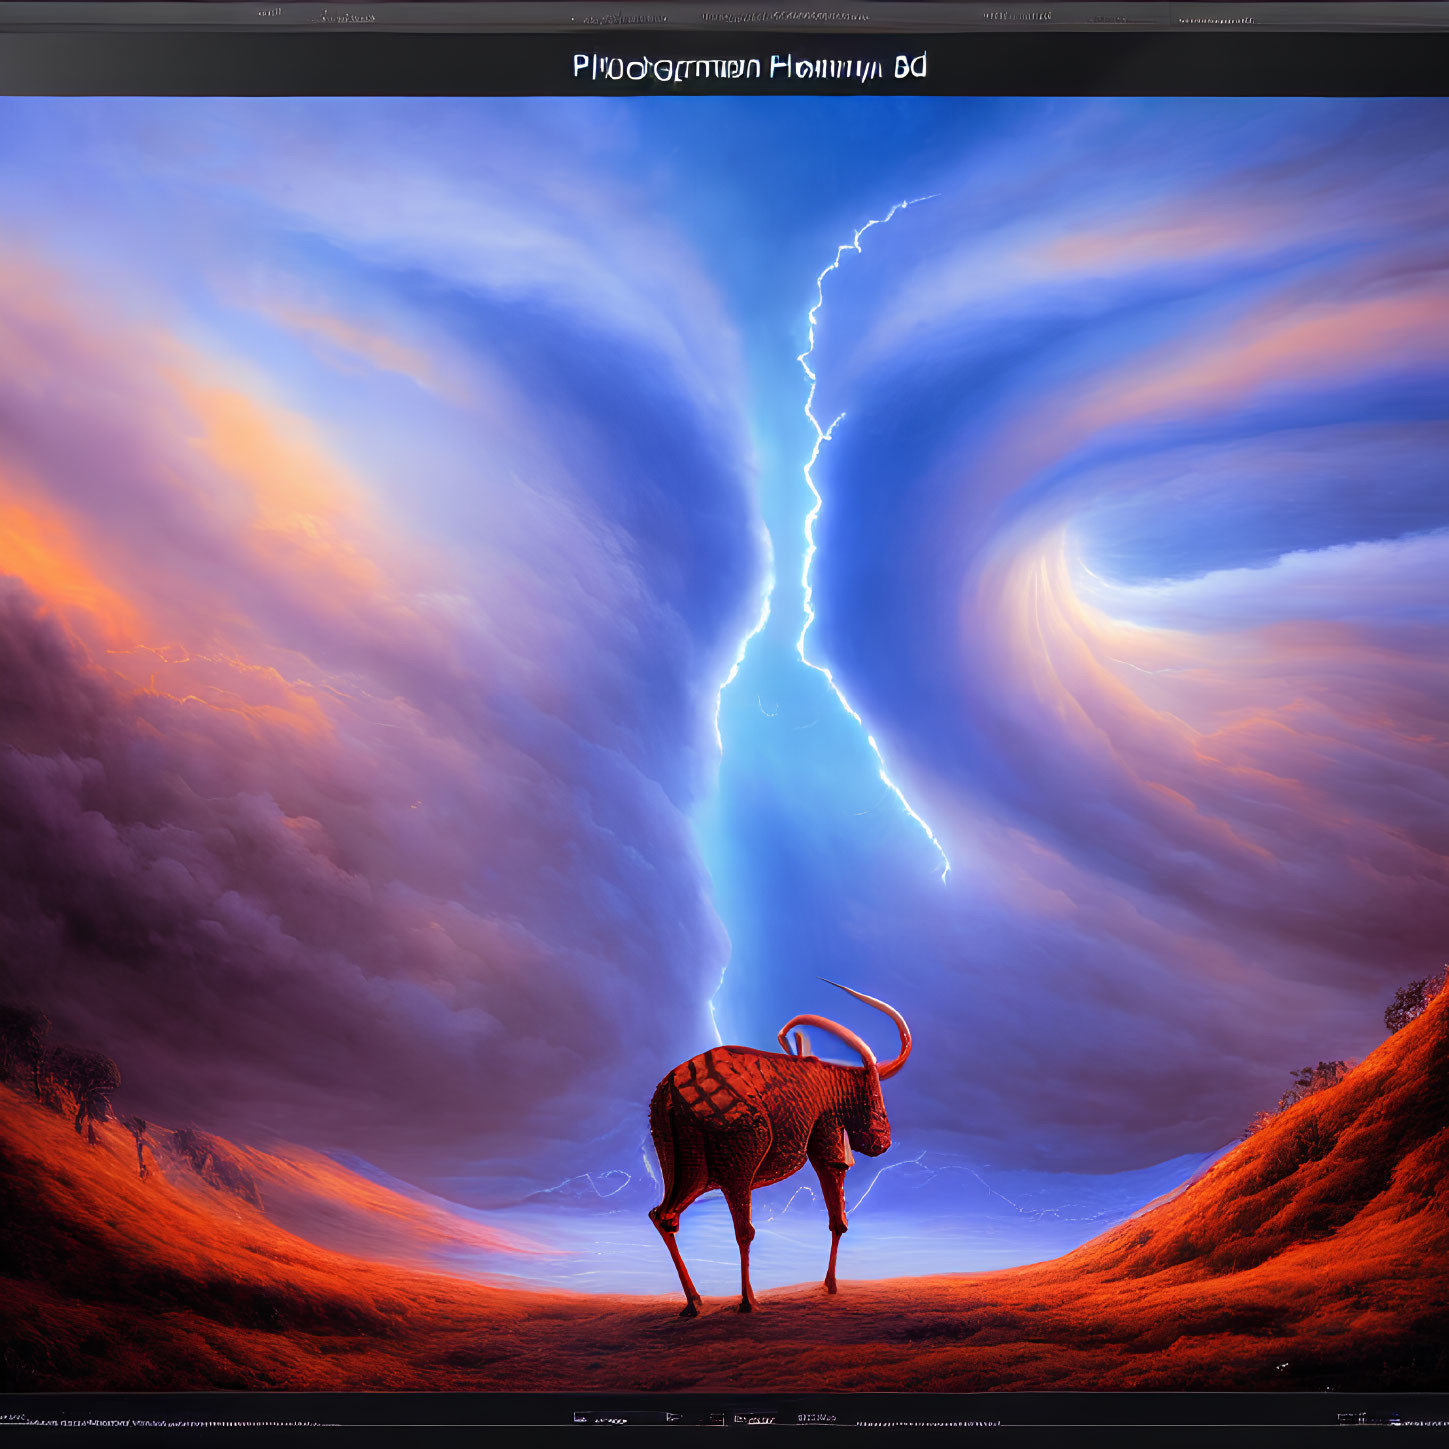 Vivid digital artwork of kudu antelope under dramatic sky